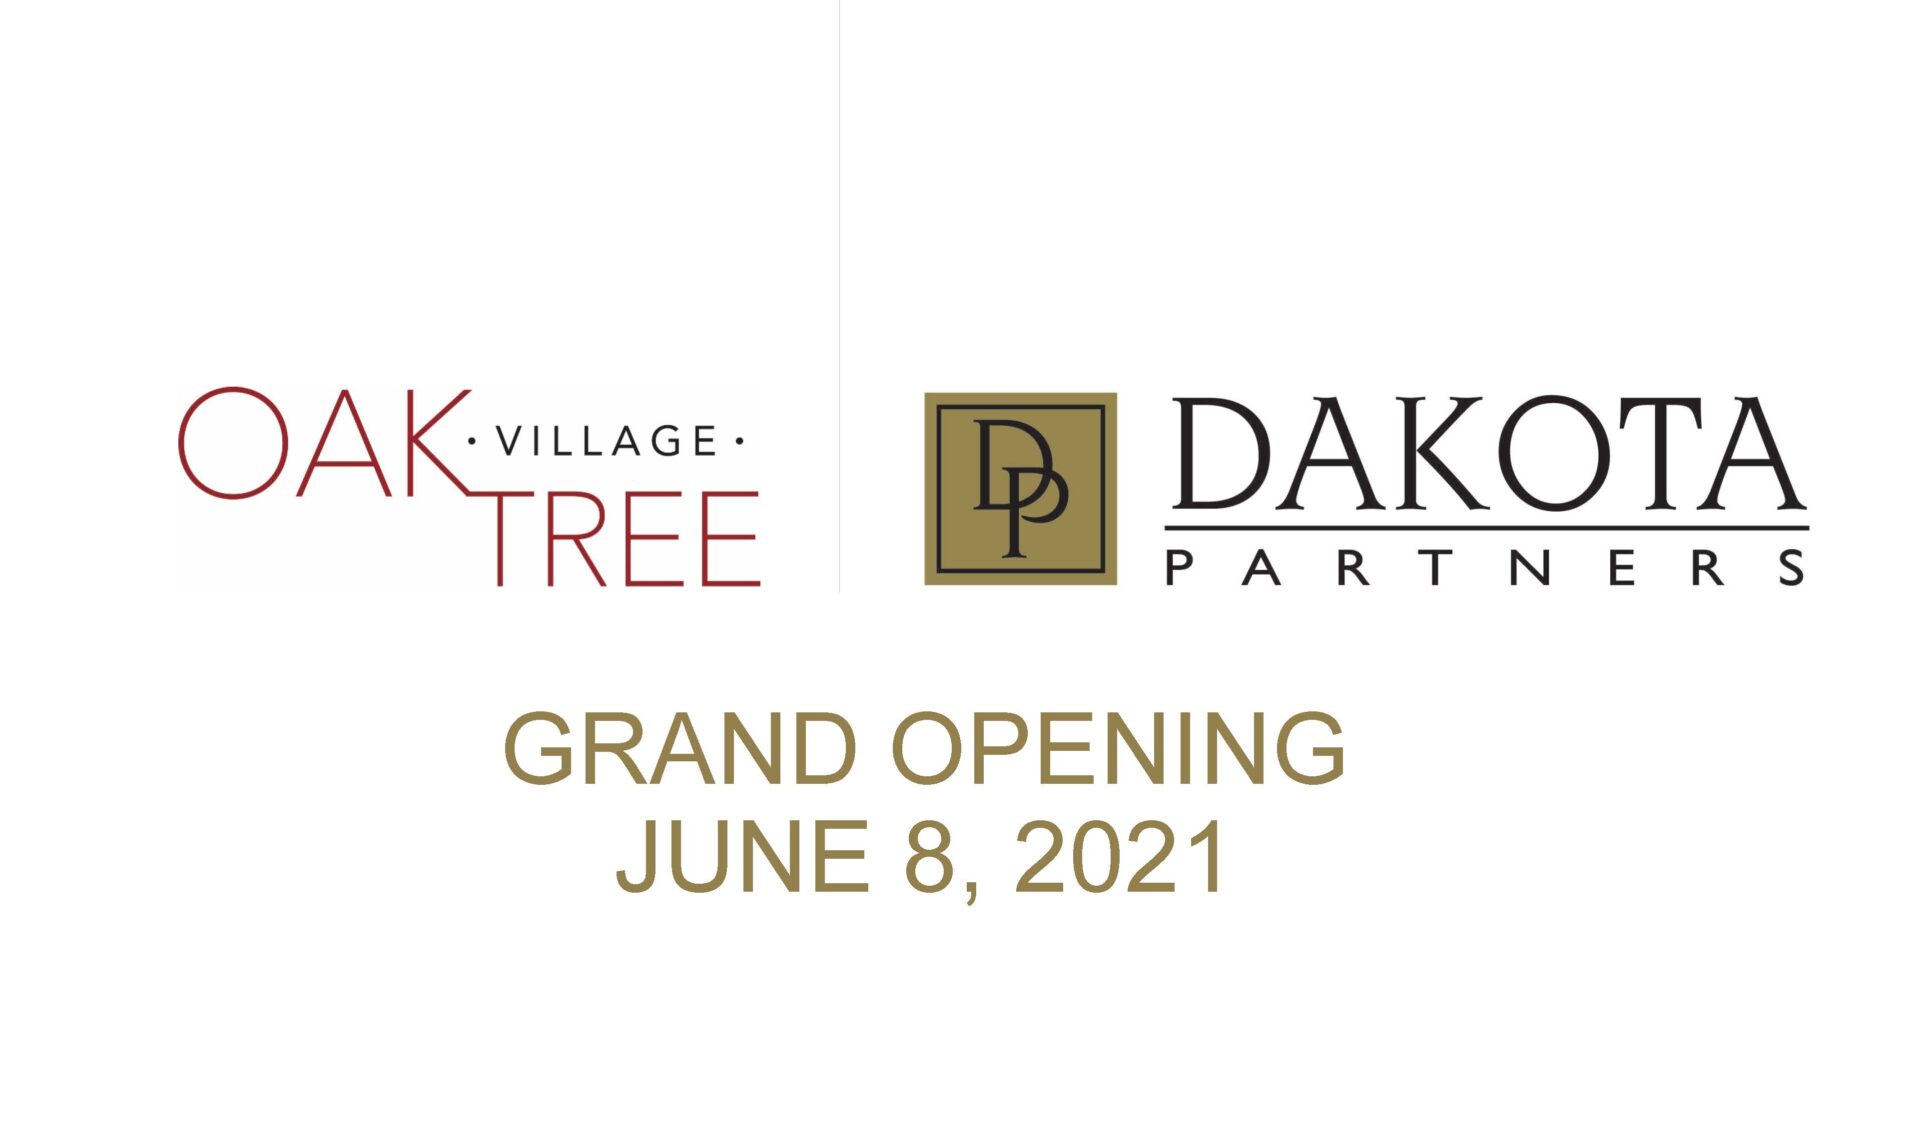 Dakota Partners Celebrates Grand Opening of Oak Tree Village